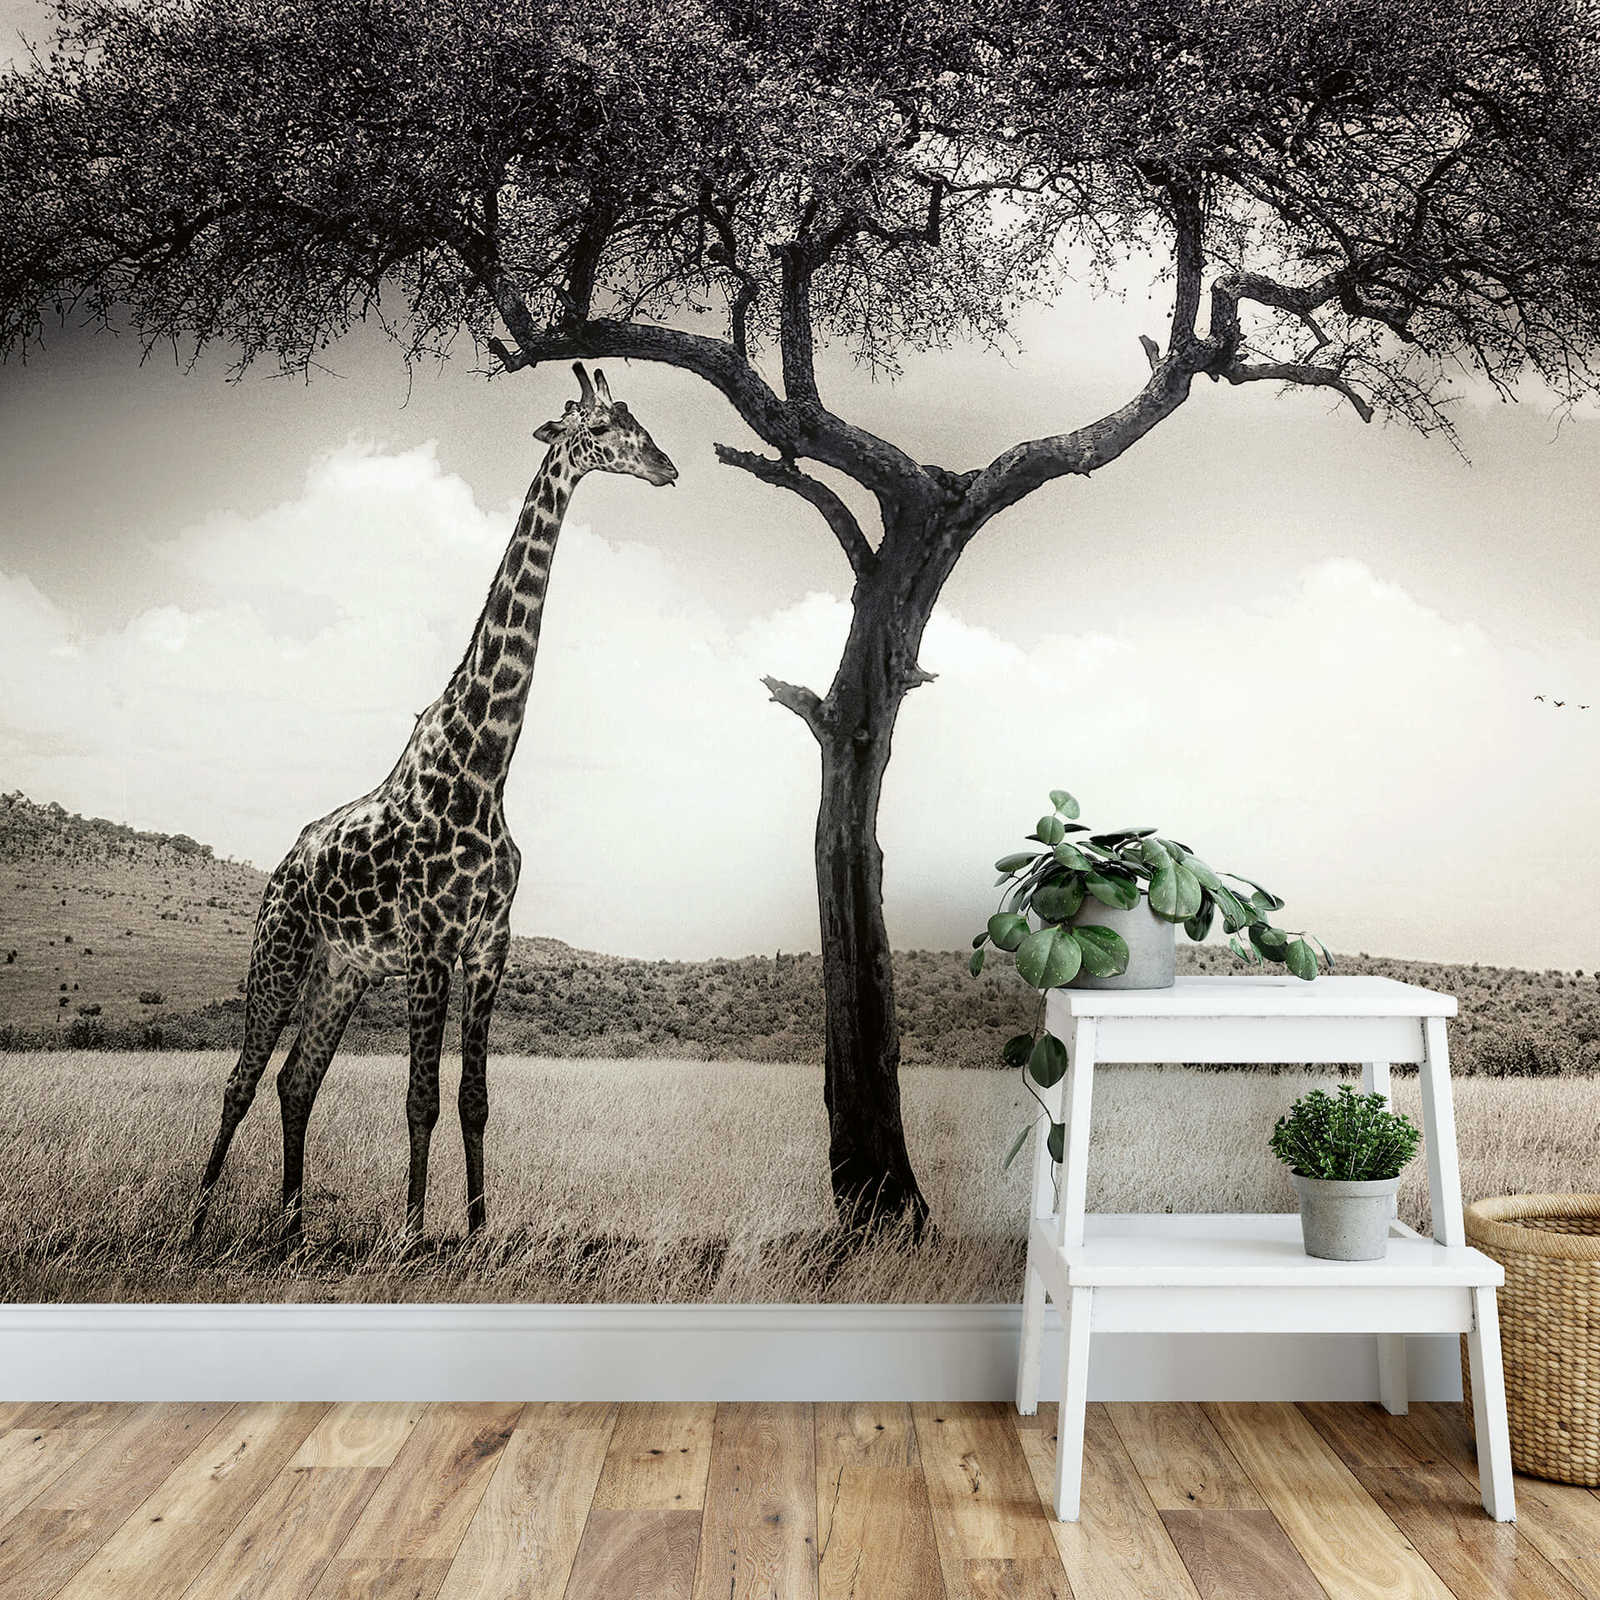             Papier peint Safari animal girafe - gris, blanc, noir
        